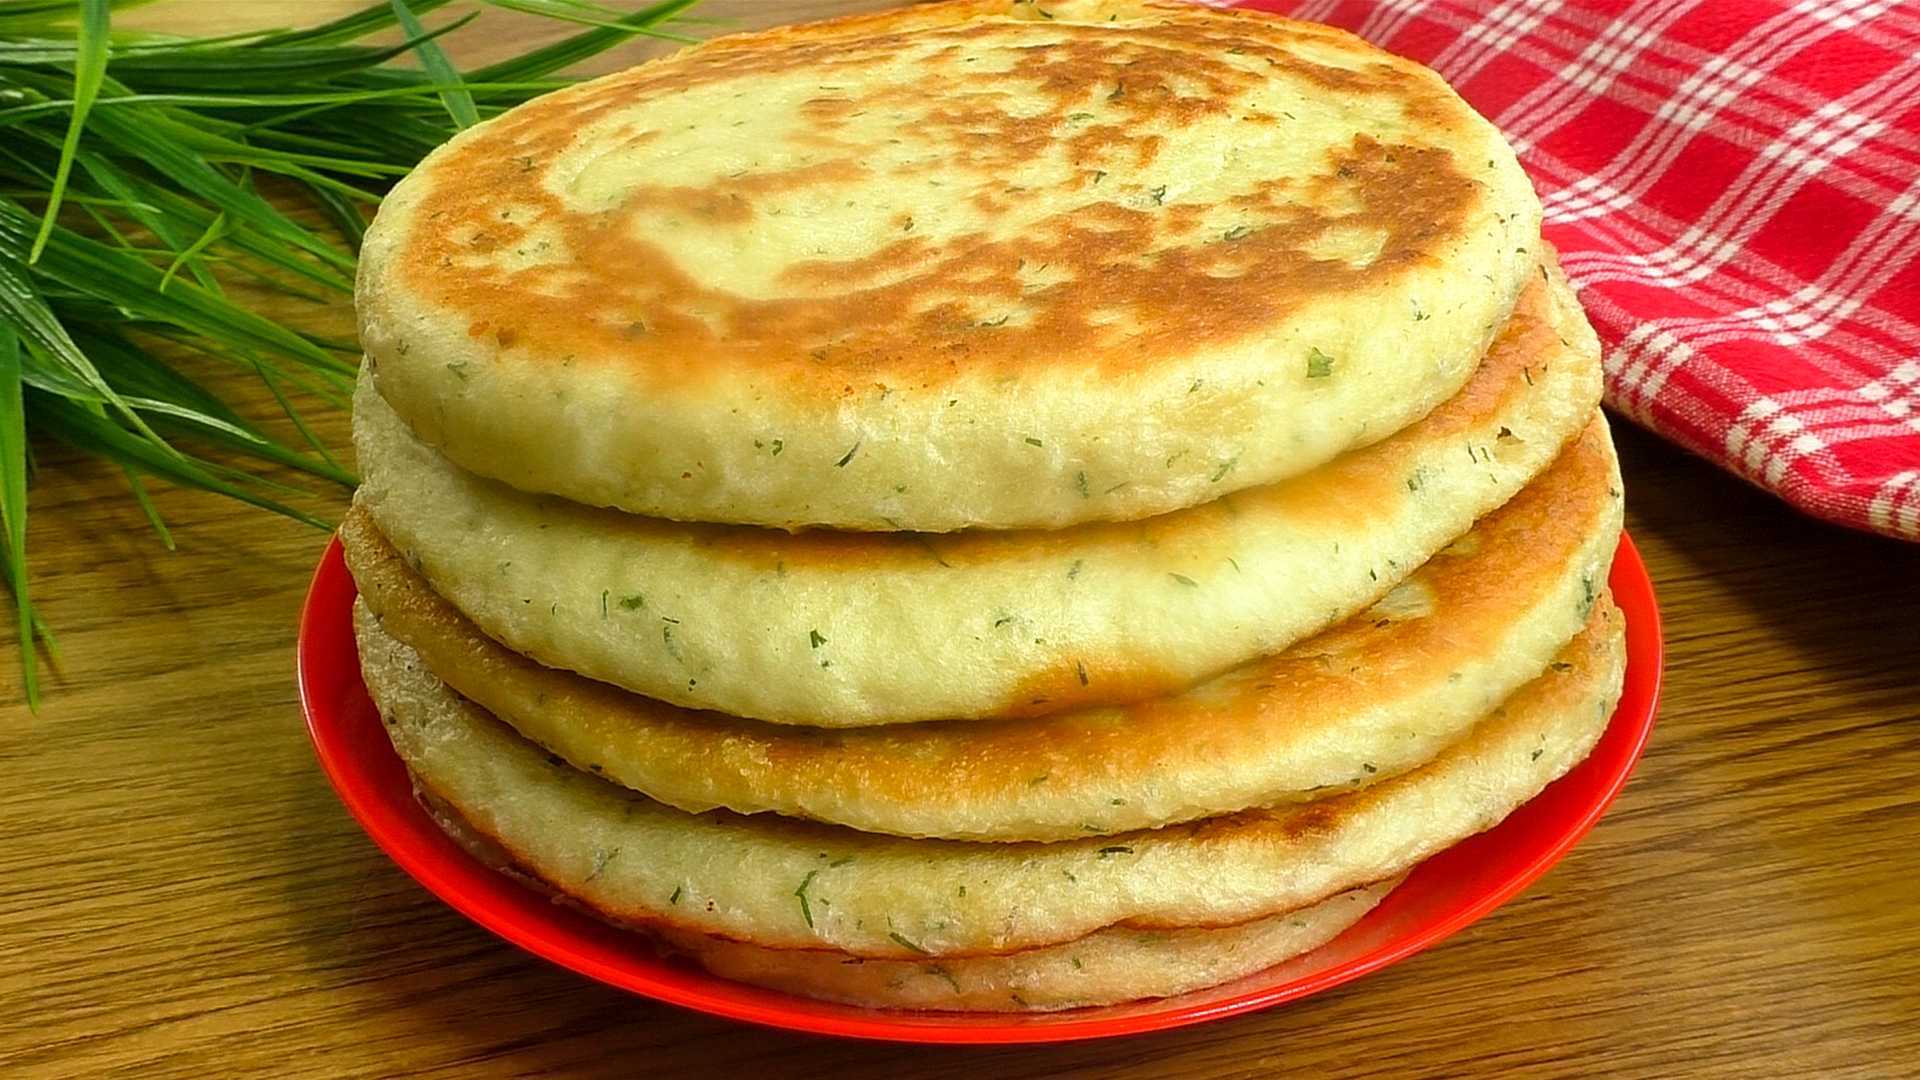 Лепешки на кефире с сыром и зеленью на сковороде рецепт с фото пошагово